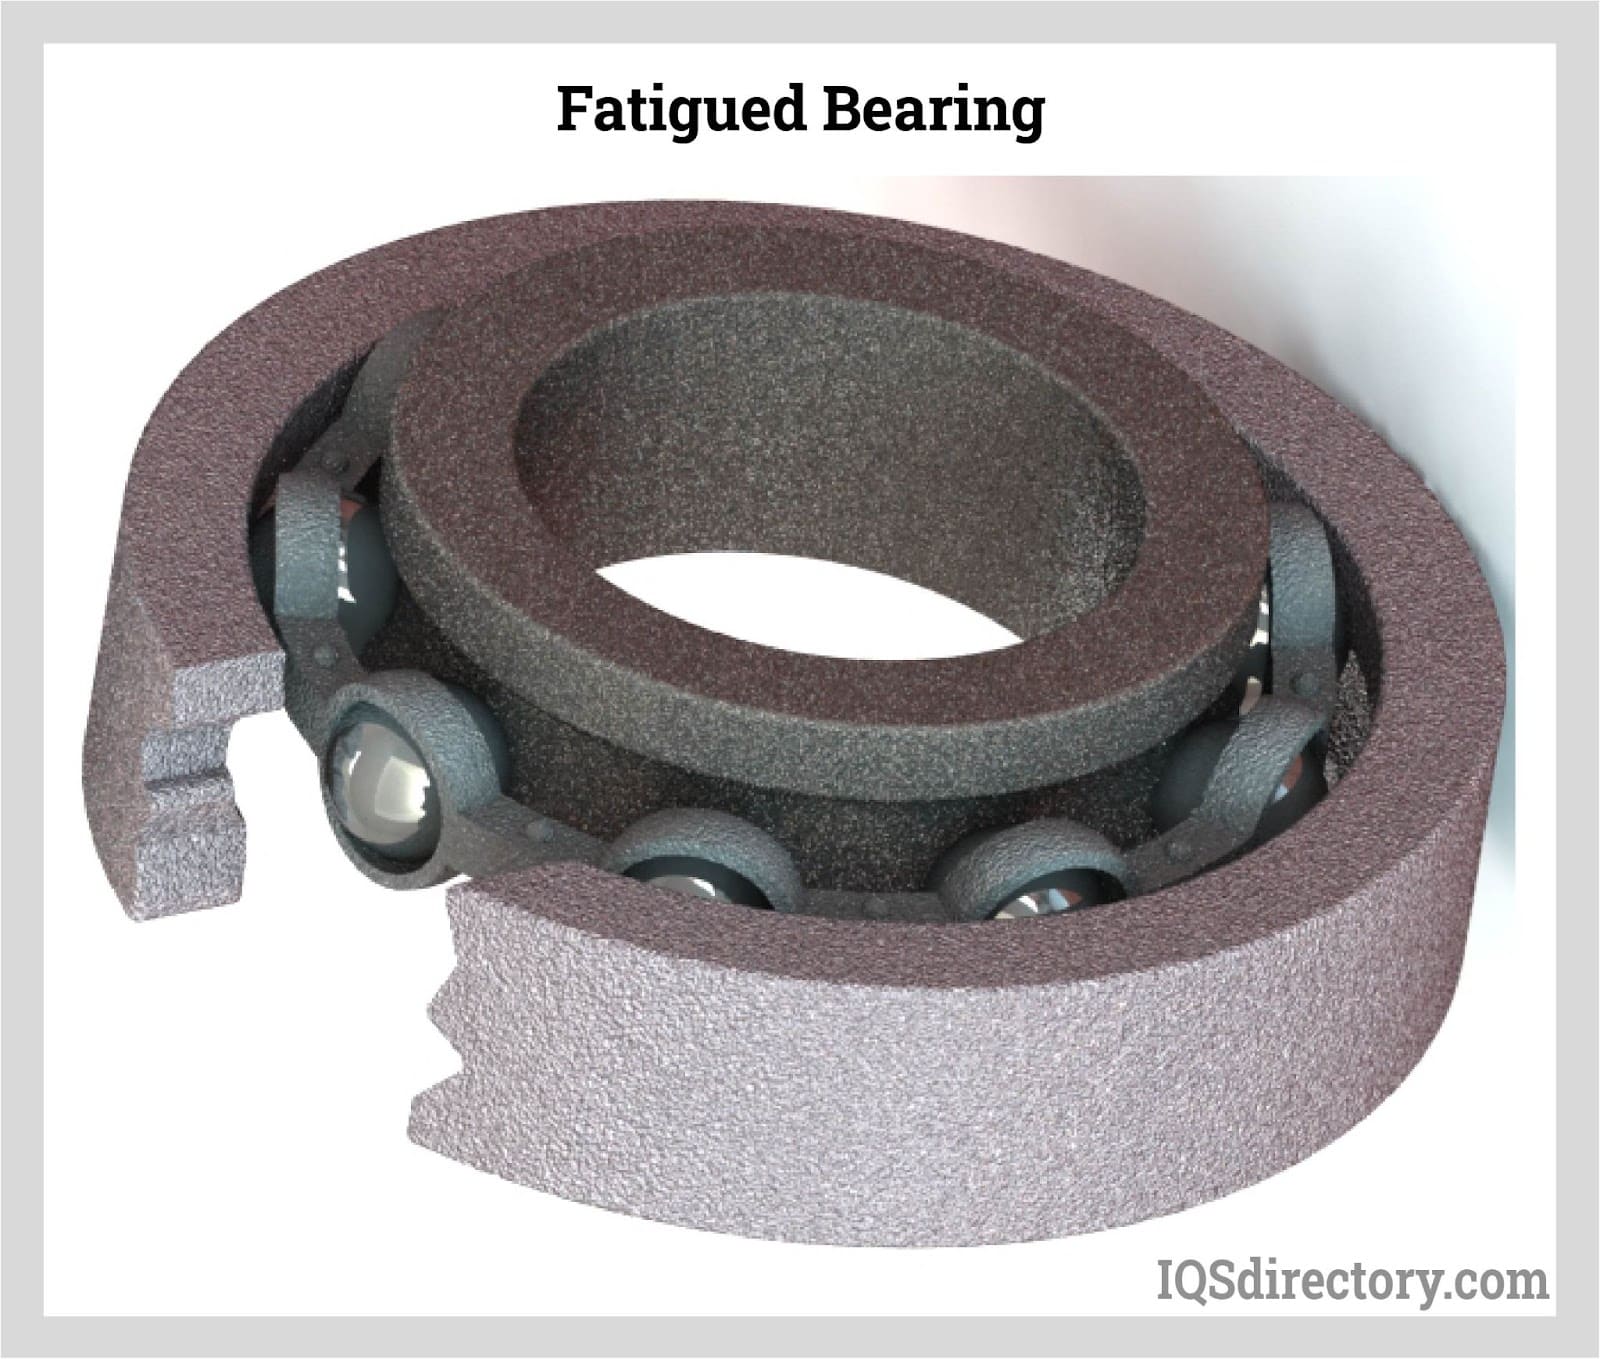 Fatigued Bearing